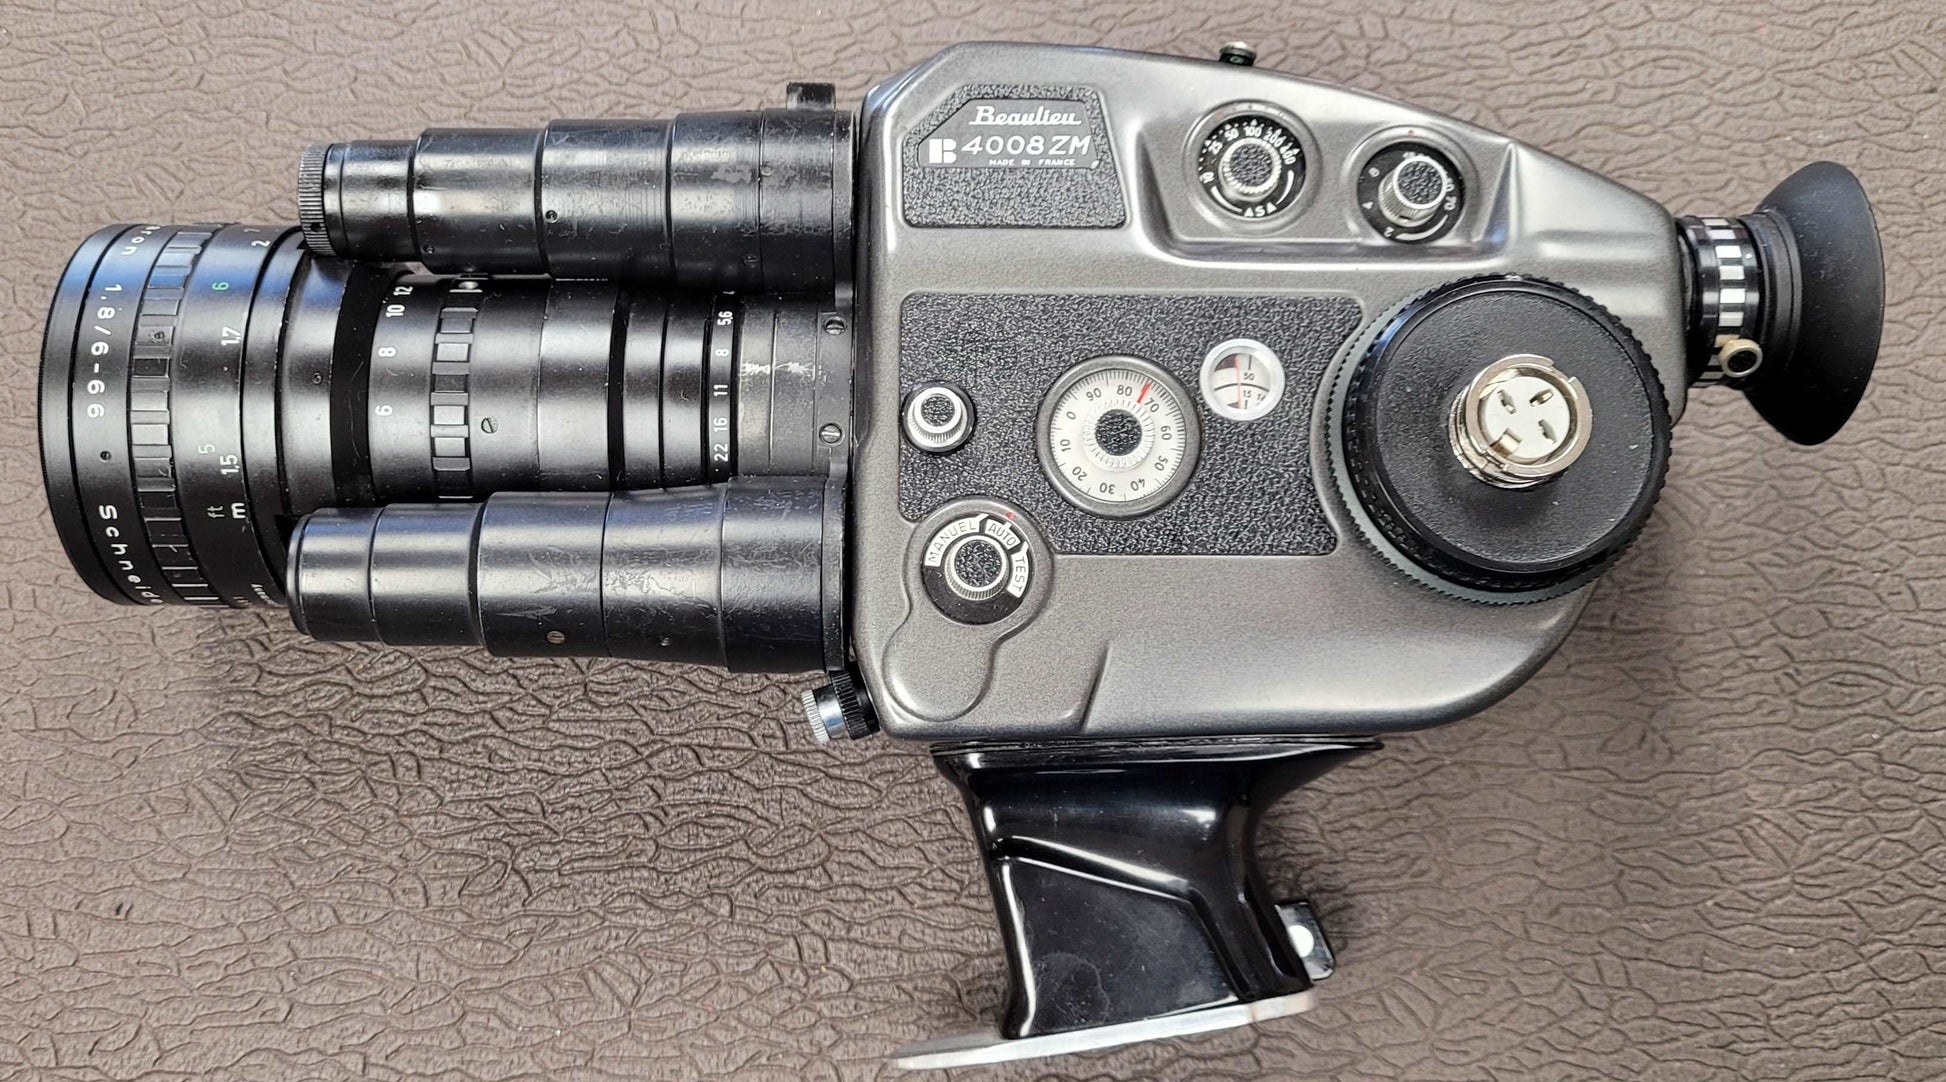 Beaulieu 4008 ZM2 Super 8mm Camera with Angenieux 8-64mm Zoom lens